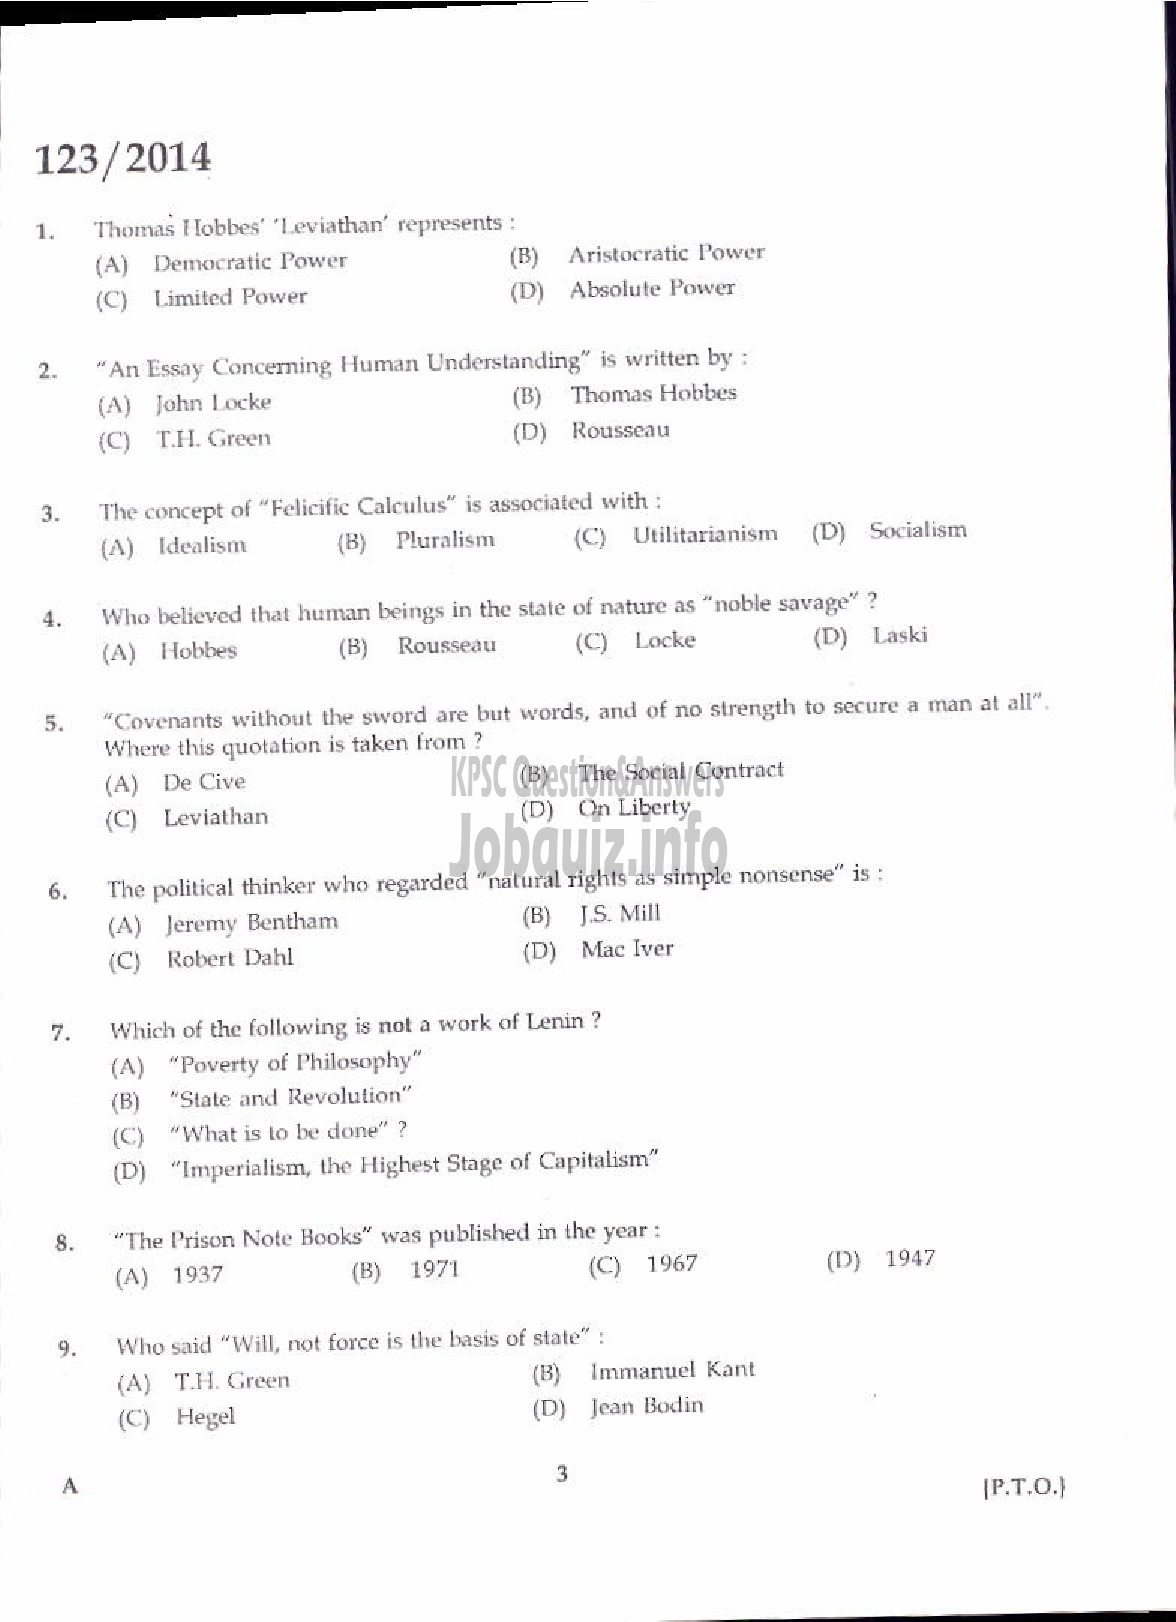 Kerala PSC Question Paper - LECTURER IN POLITICAL SCIENCE KERALA COLLEGIATE EDUCATION-1